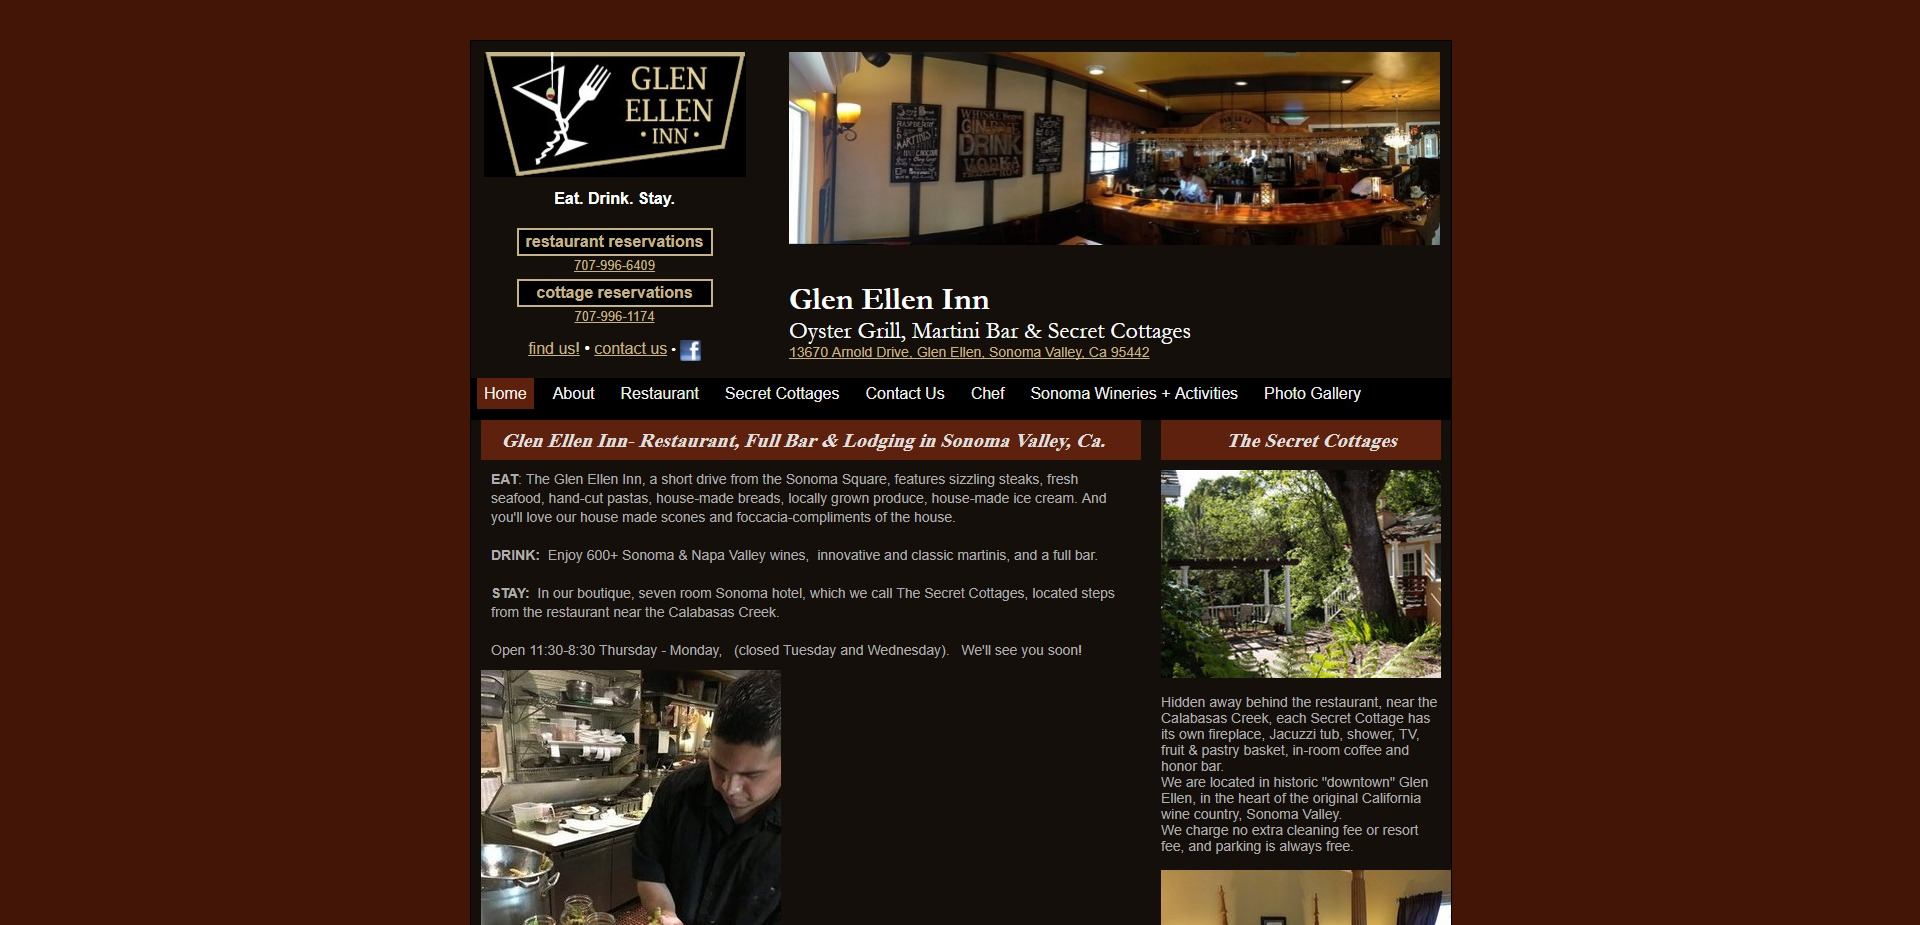 Glen Ellen Inn Oyster Grill & Martini Bar